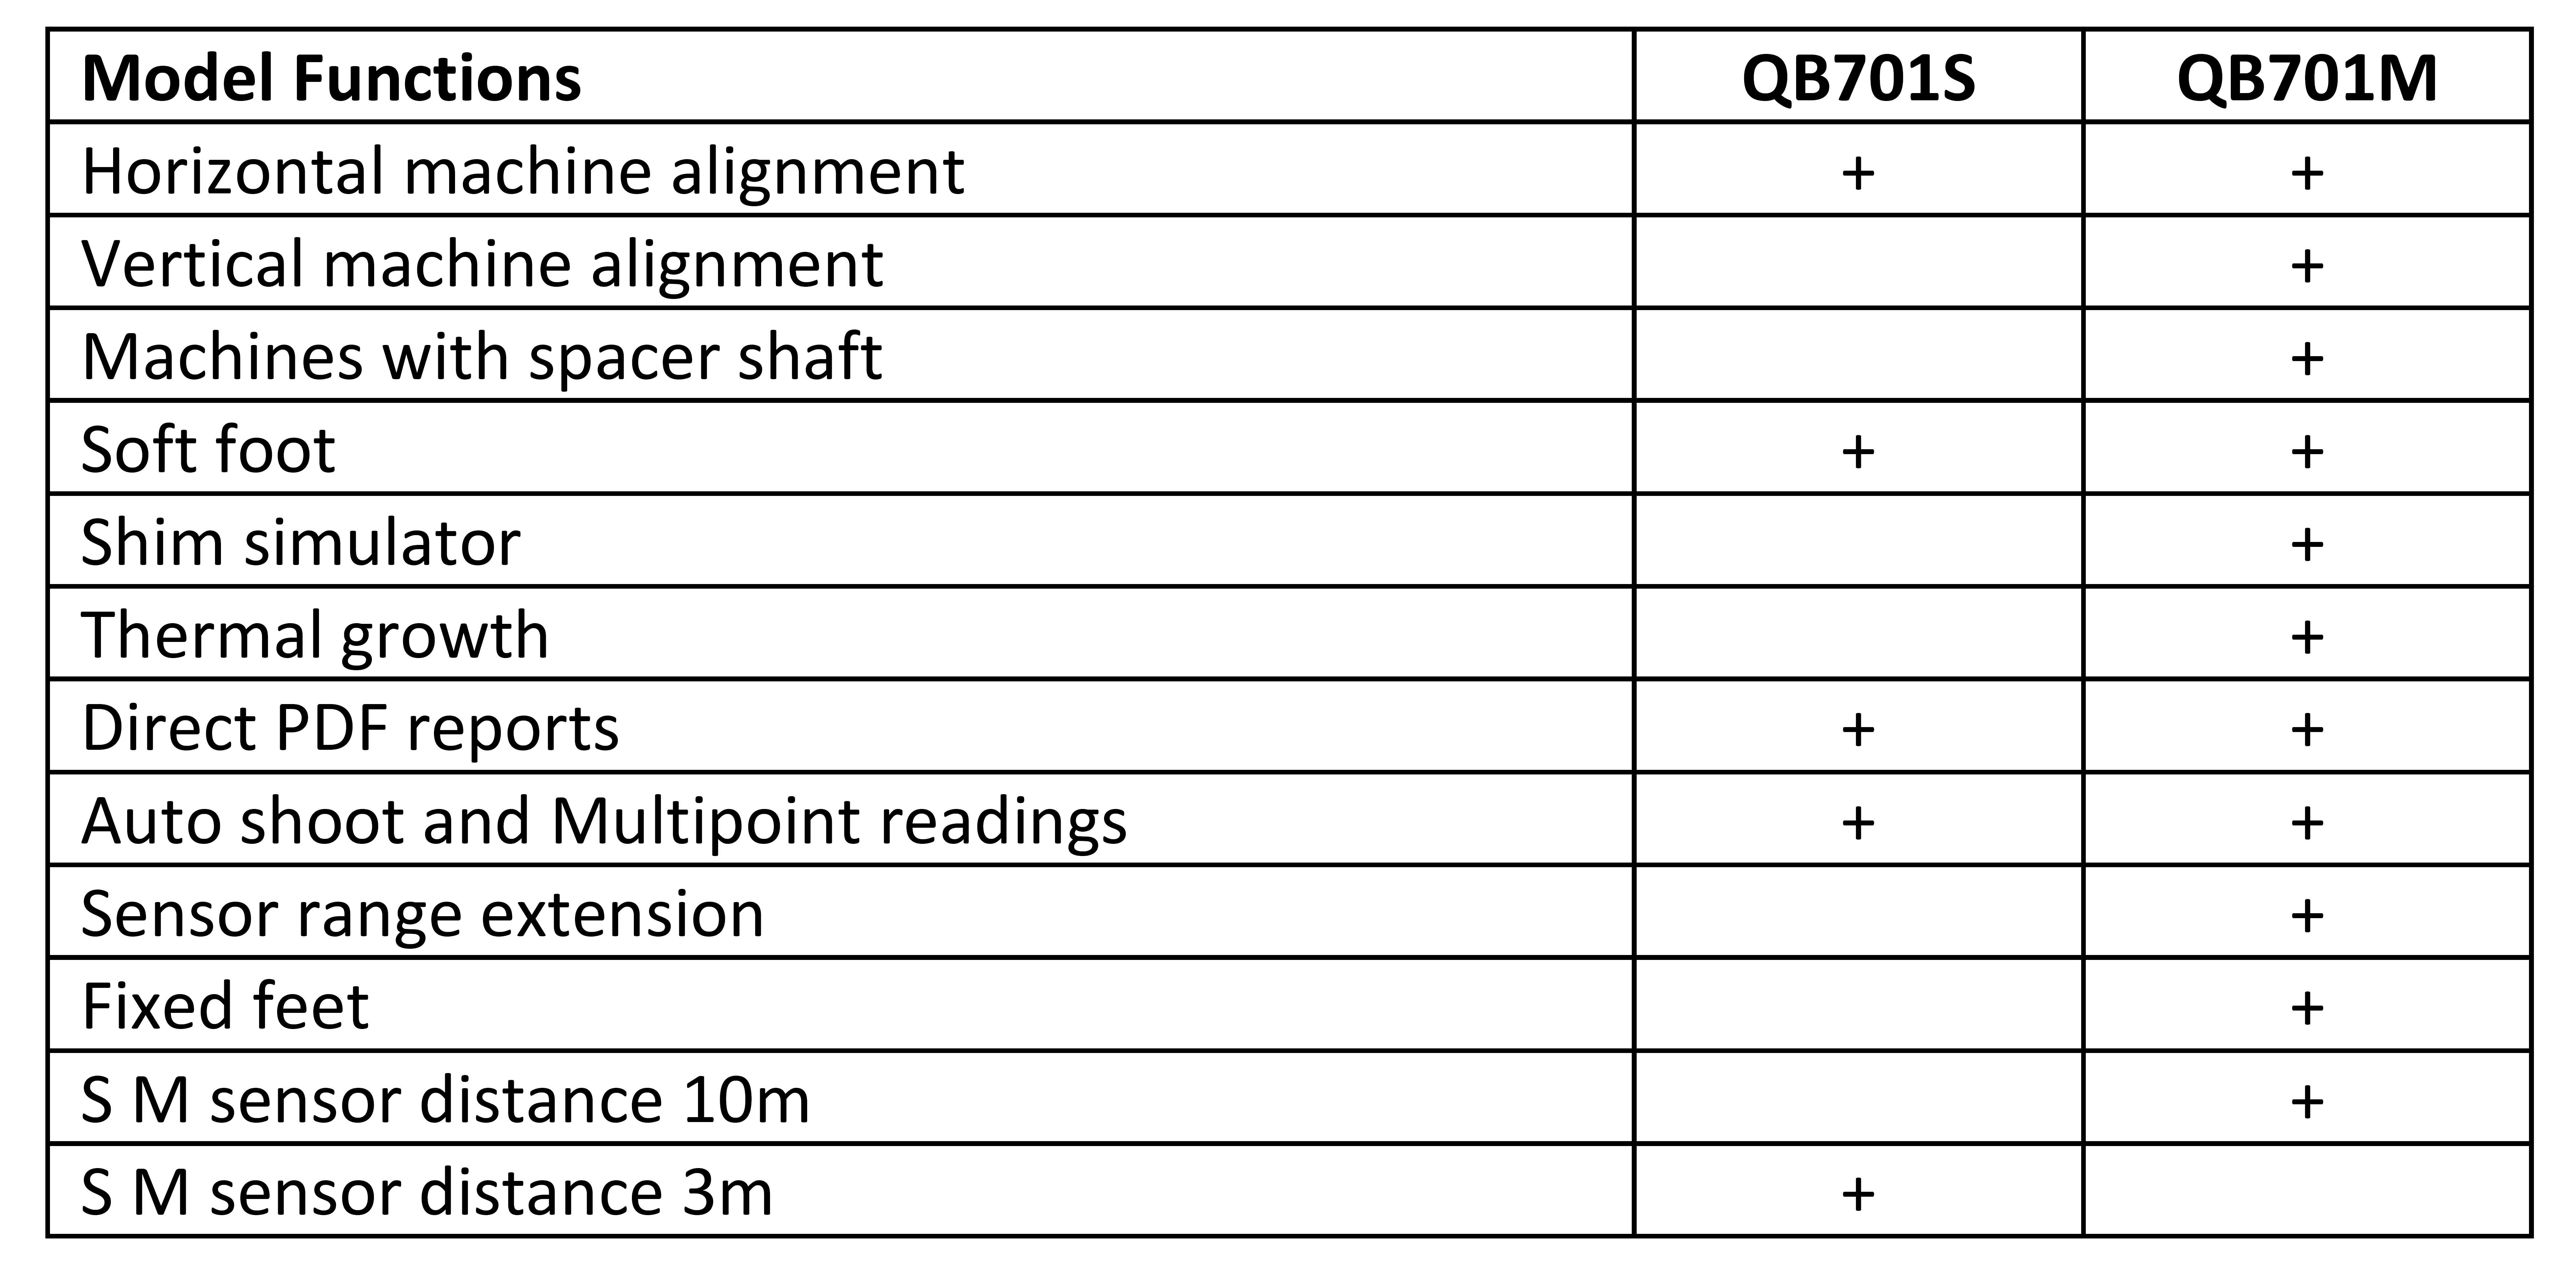 QB701_table_2022.png - 446.13 kB